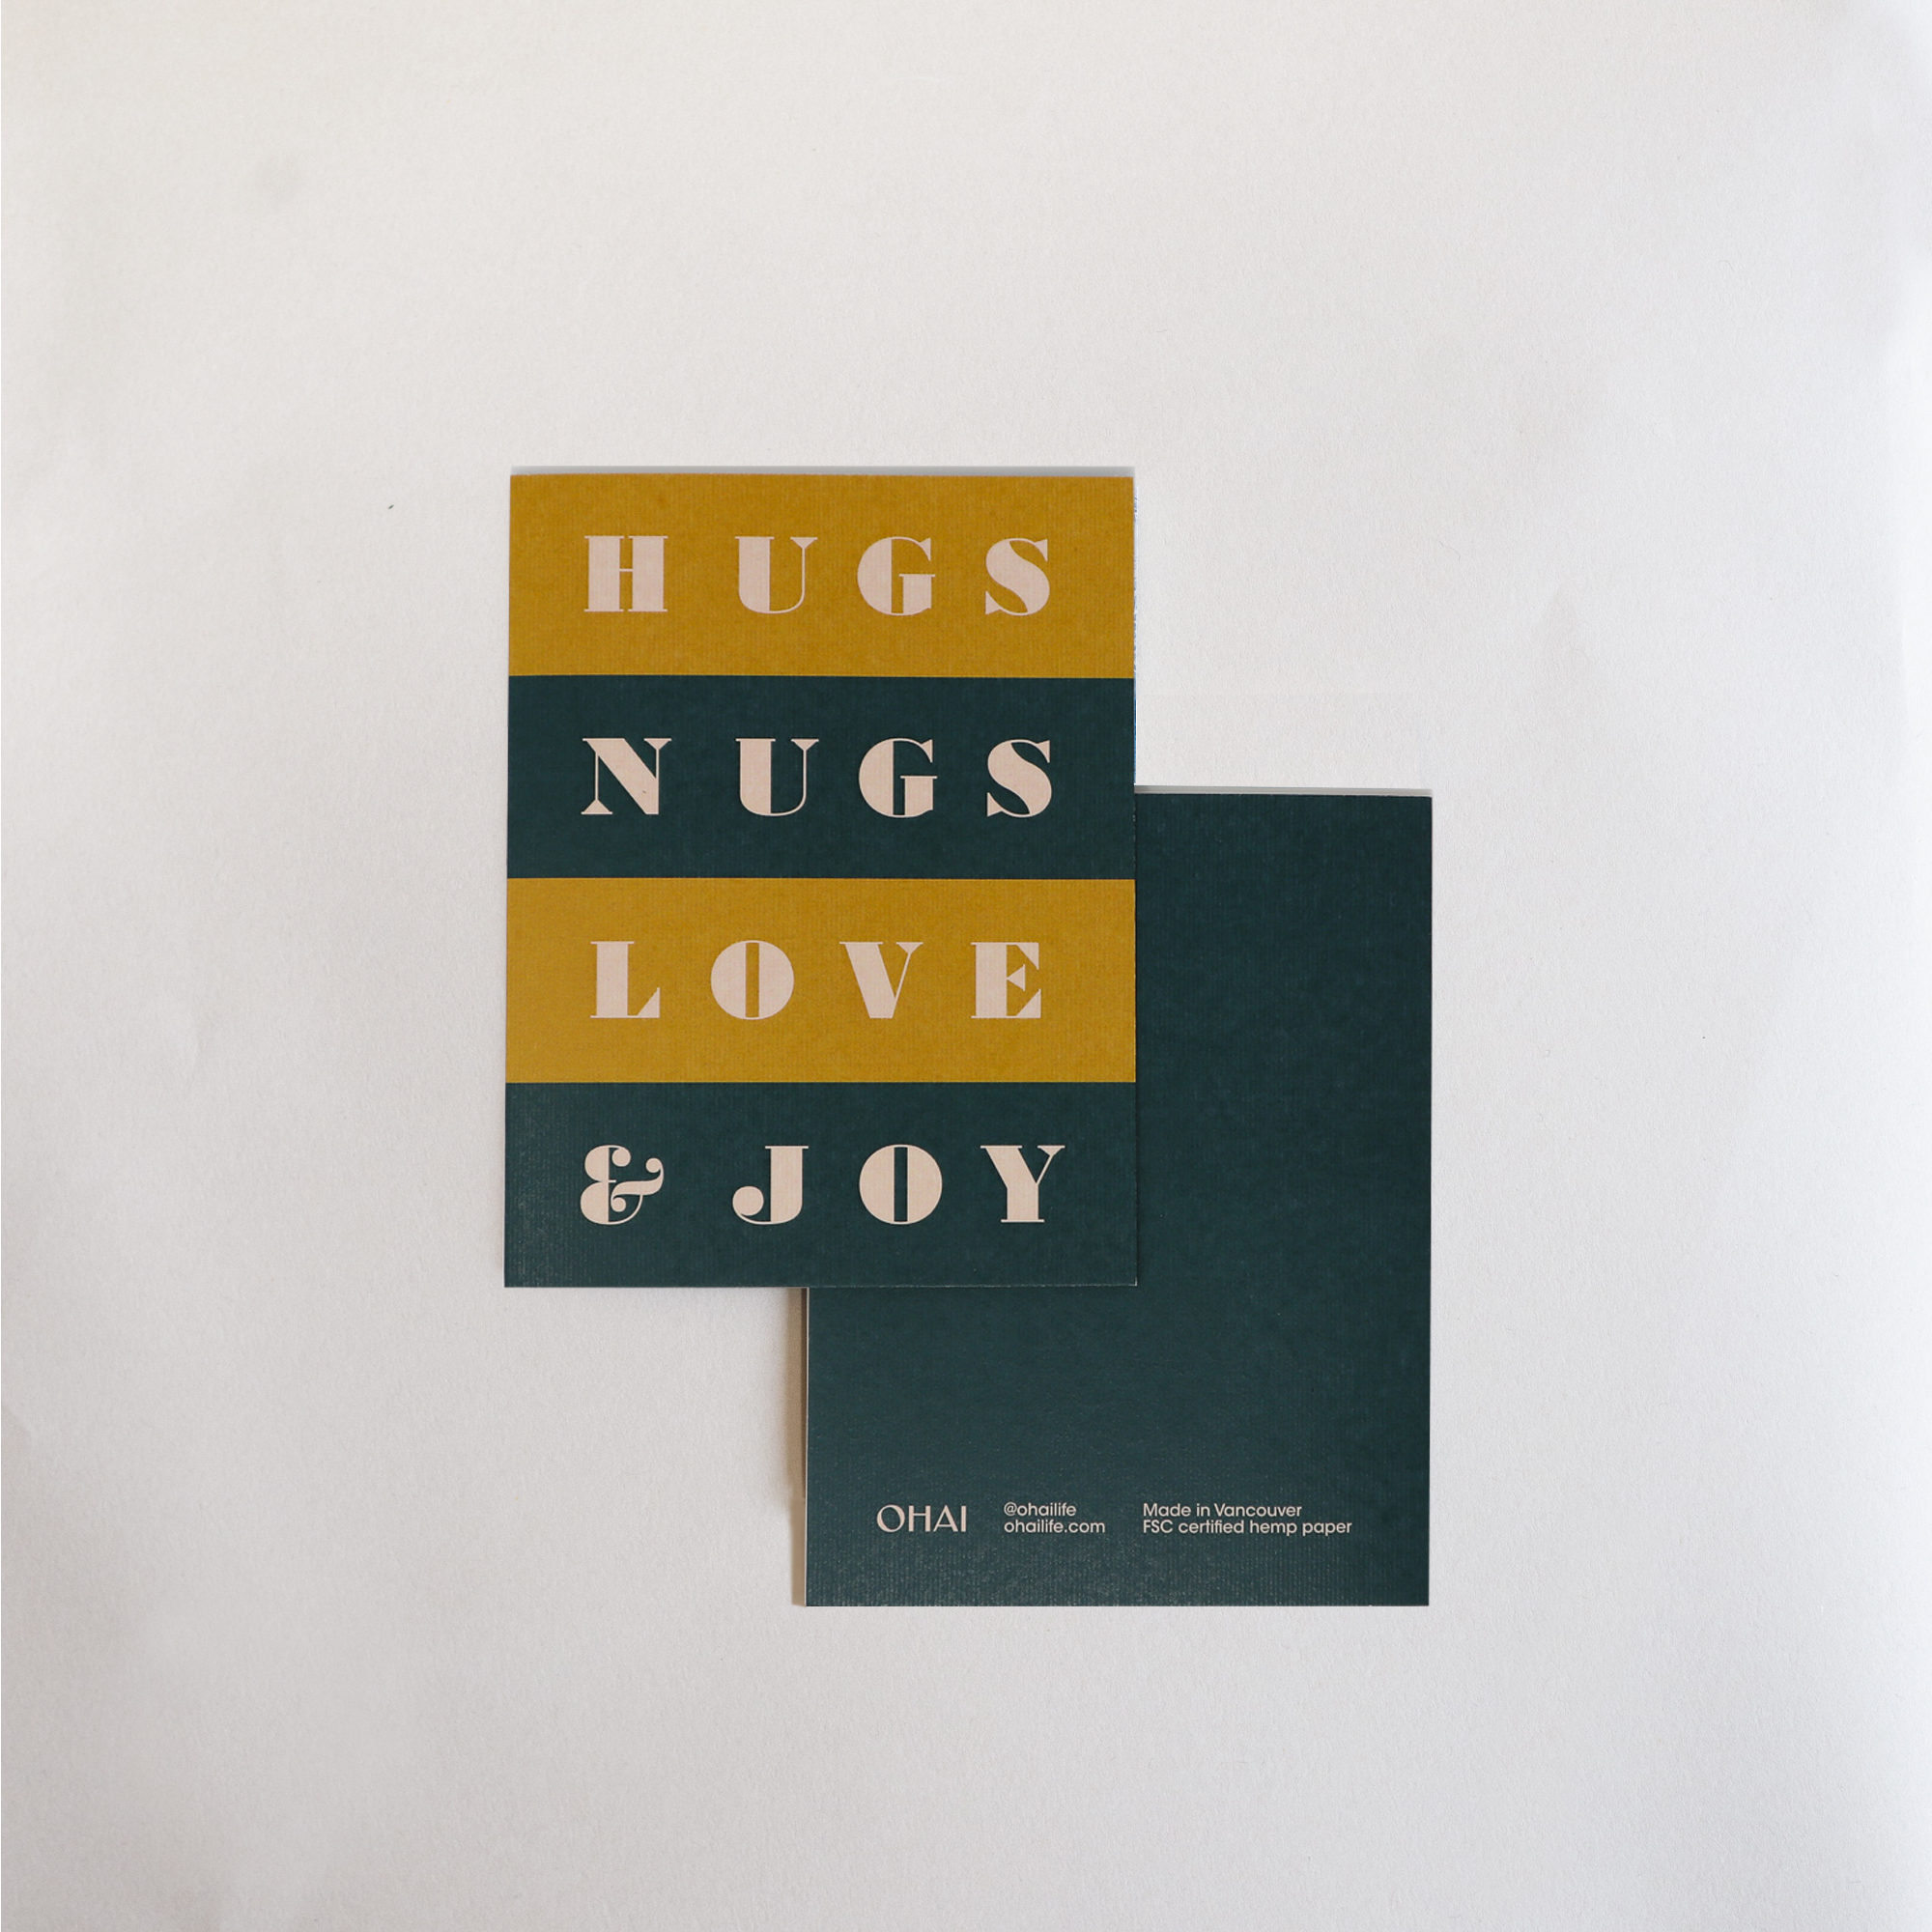 Greeting Card - Hugs & Nugs